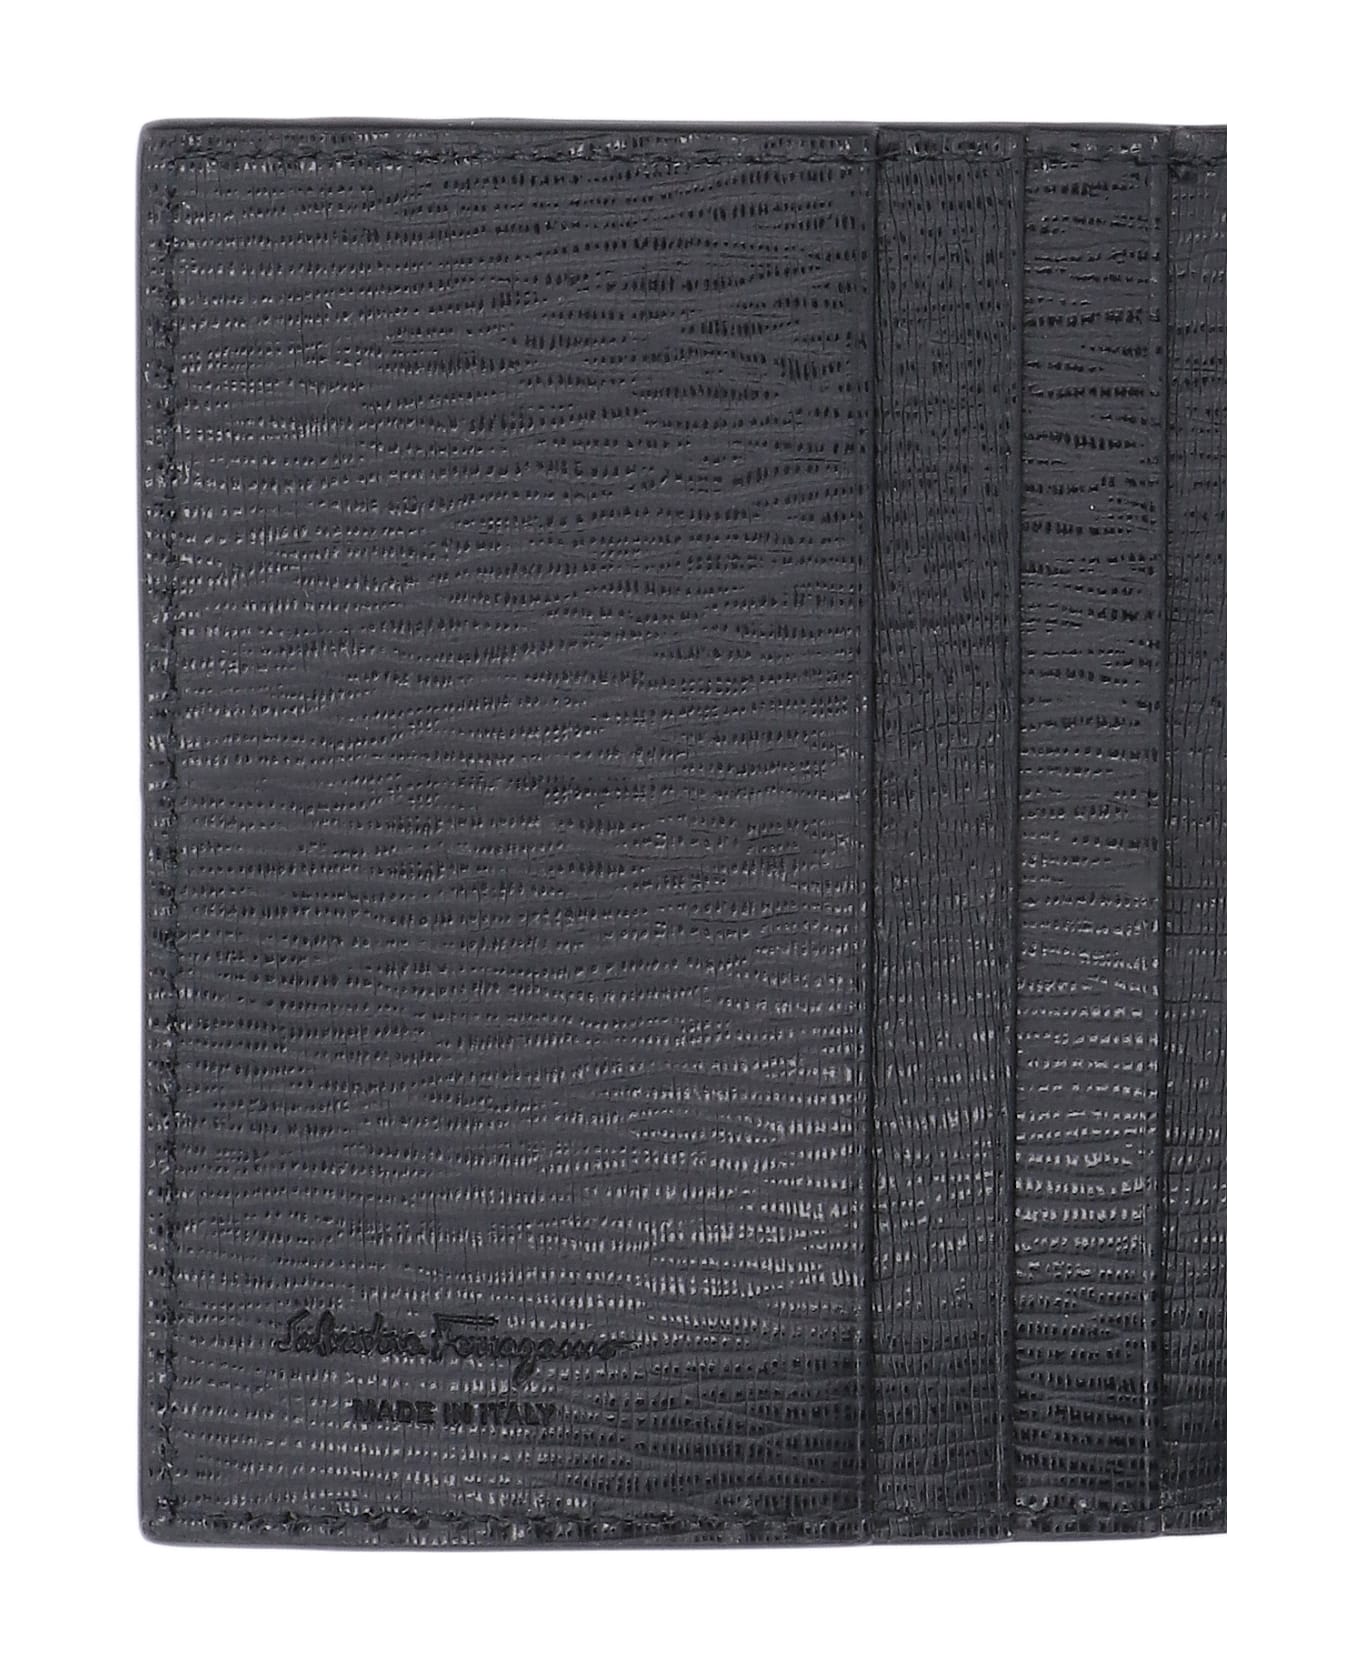 Ferragamo Gancini Bi-fold Wallet - Black   財布